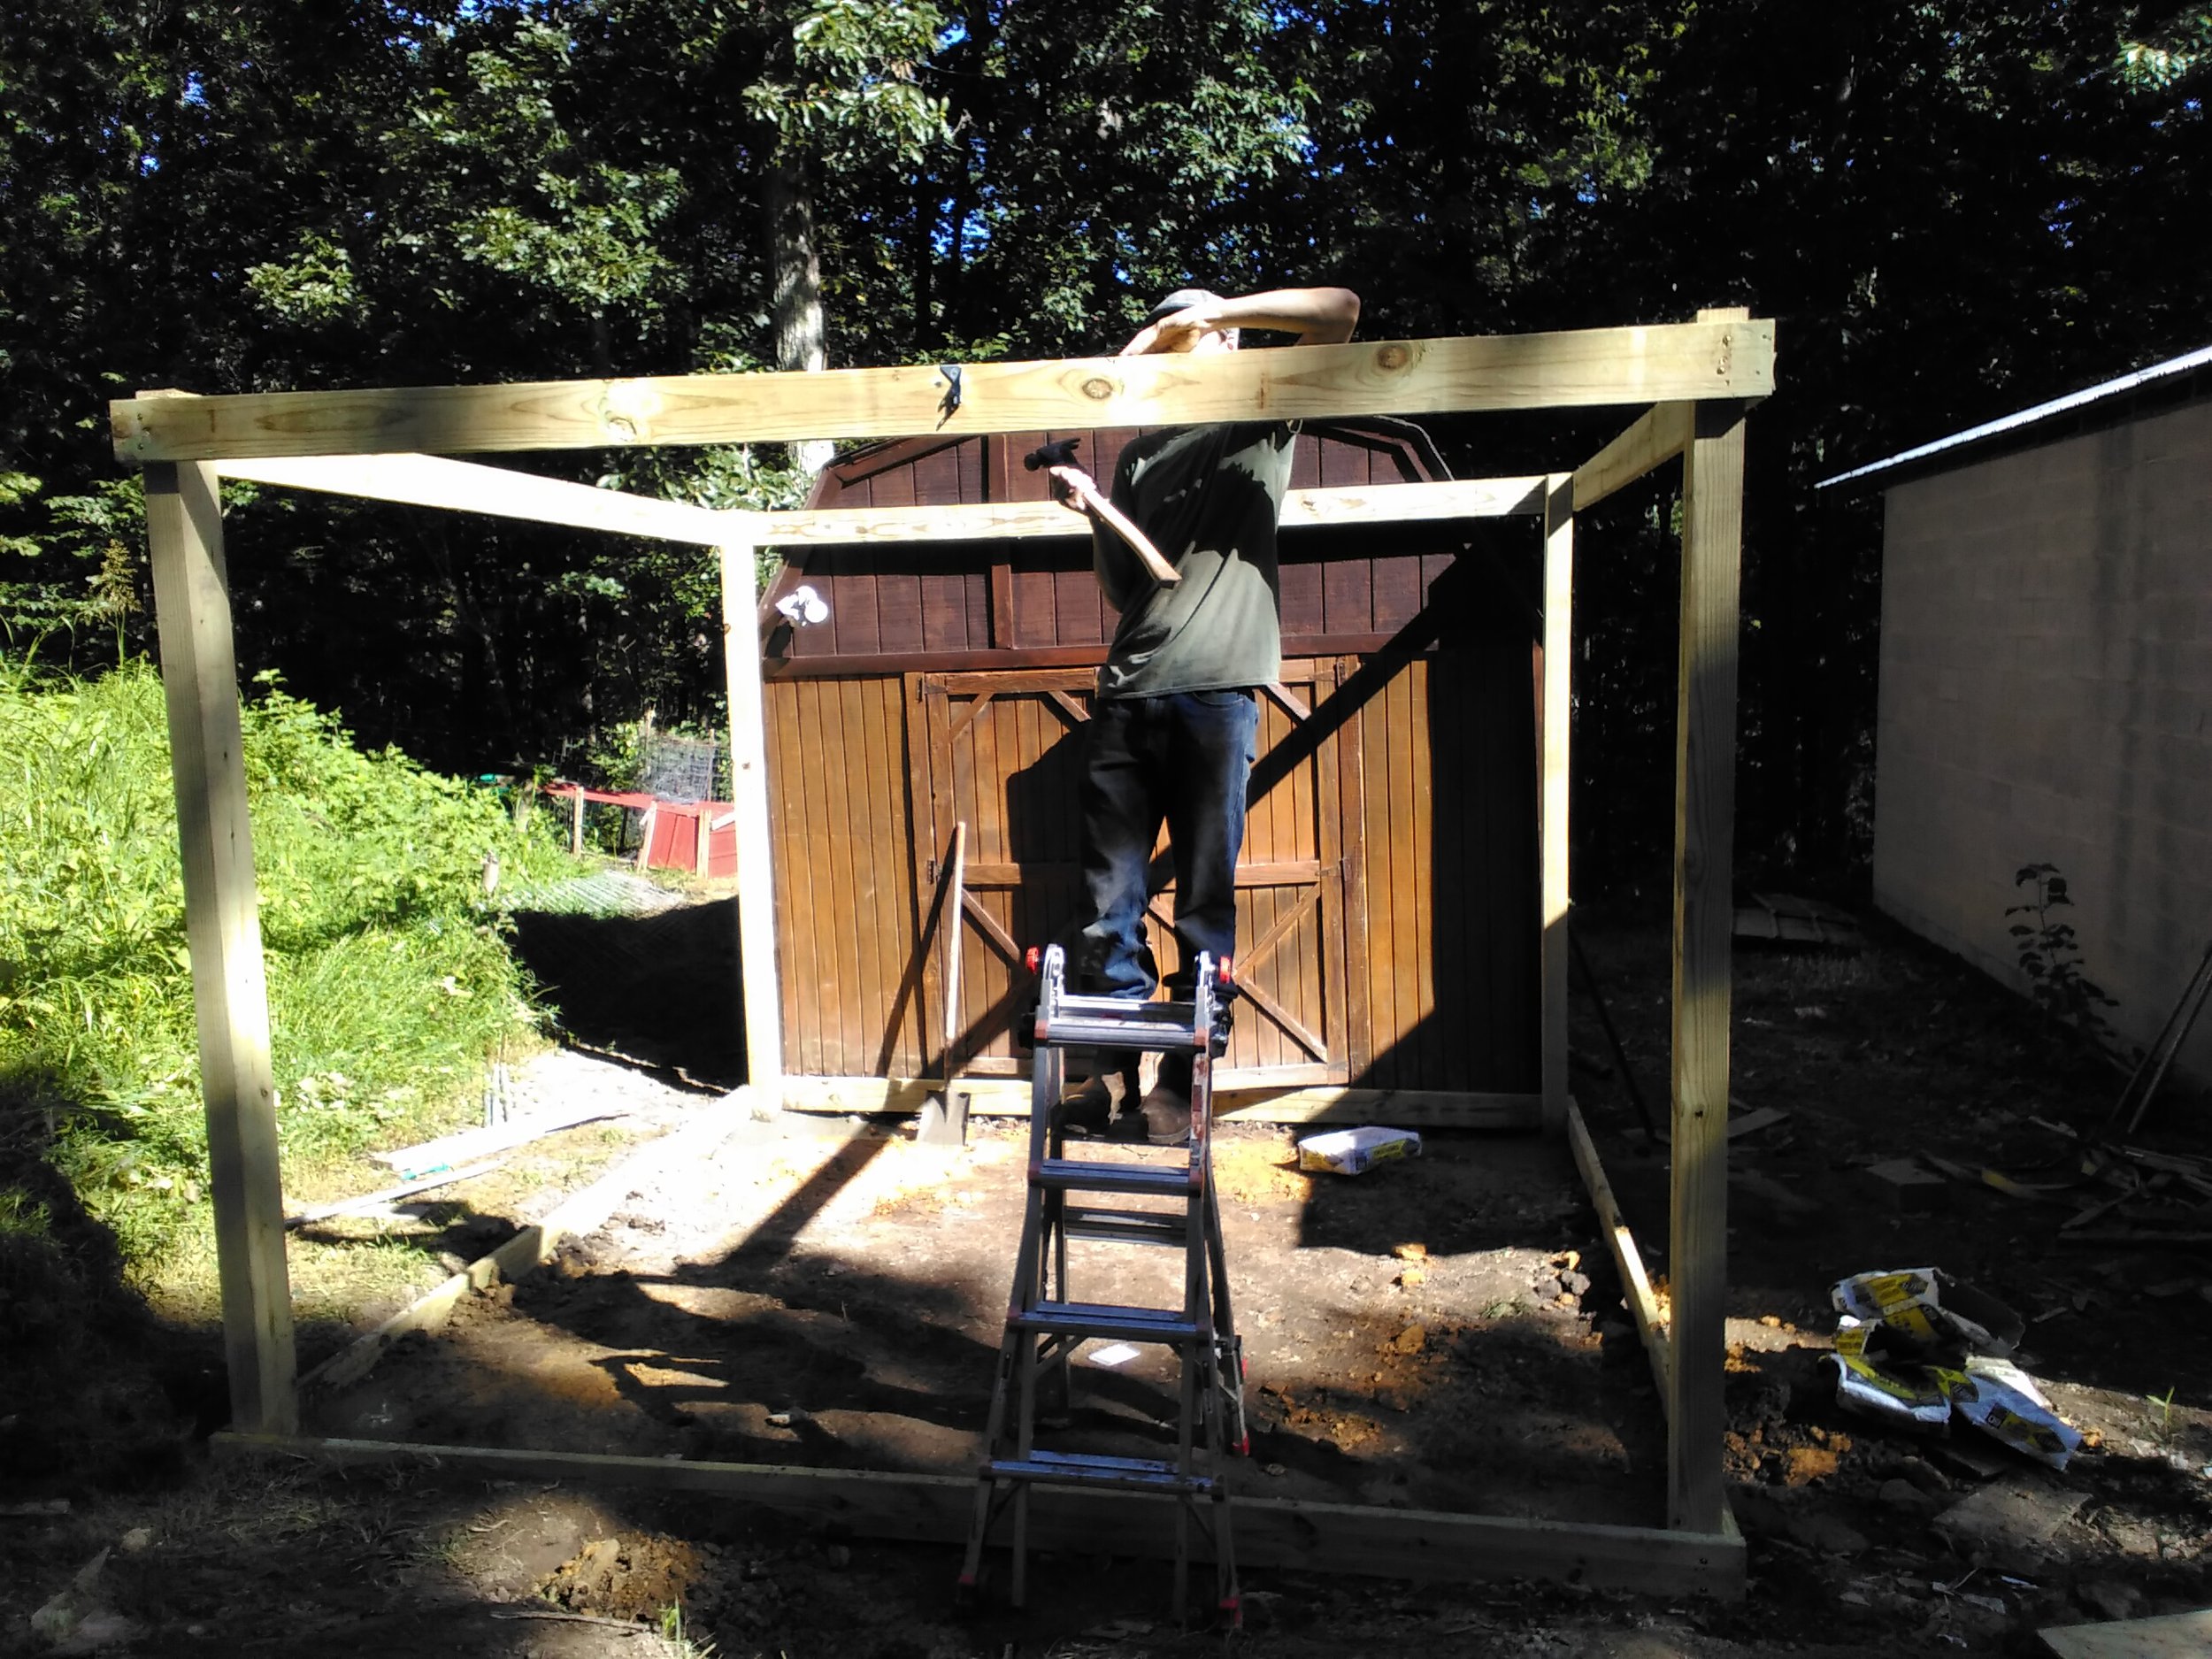 Nate building himself a shed